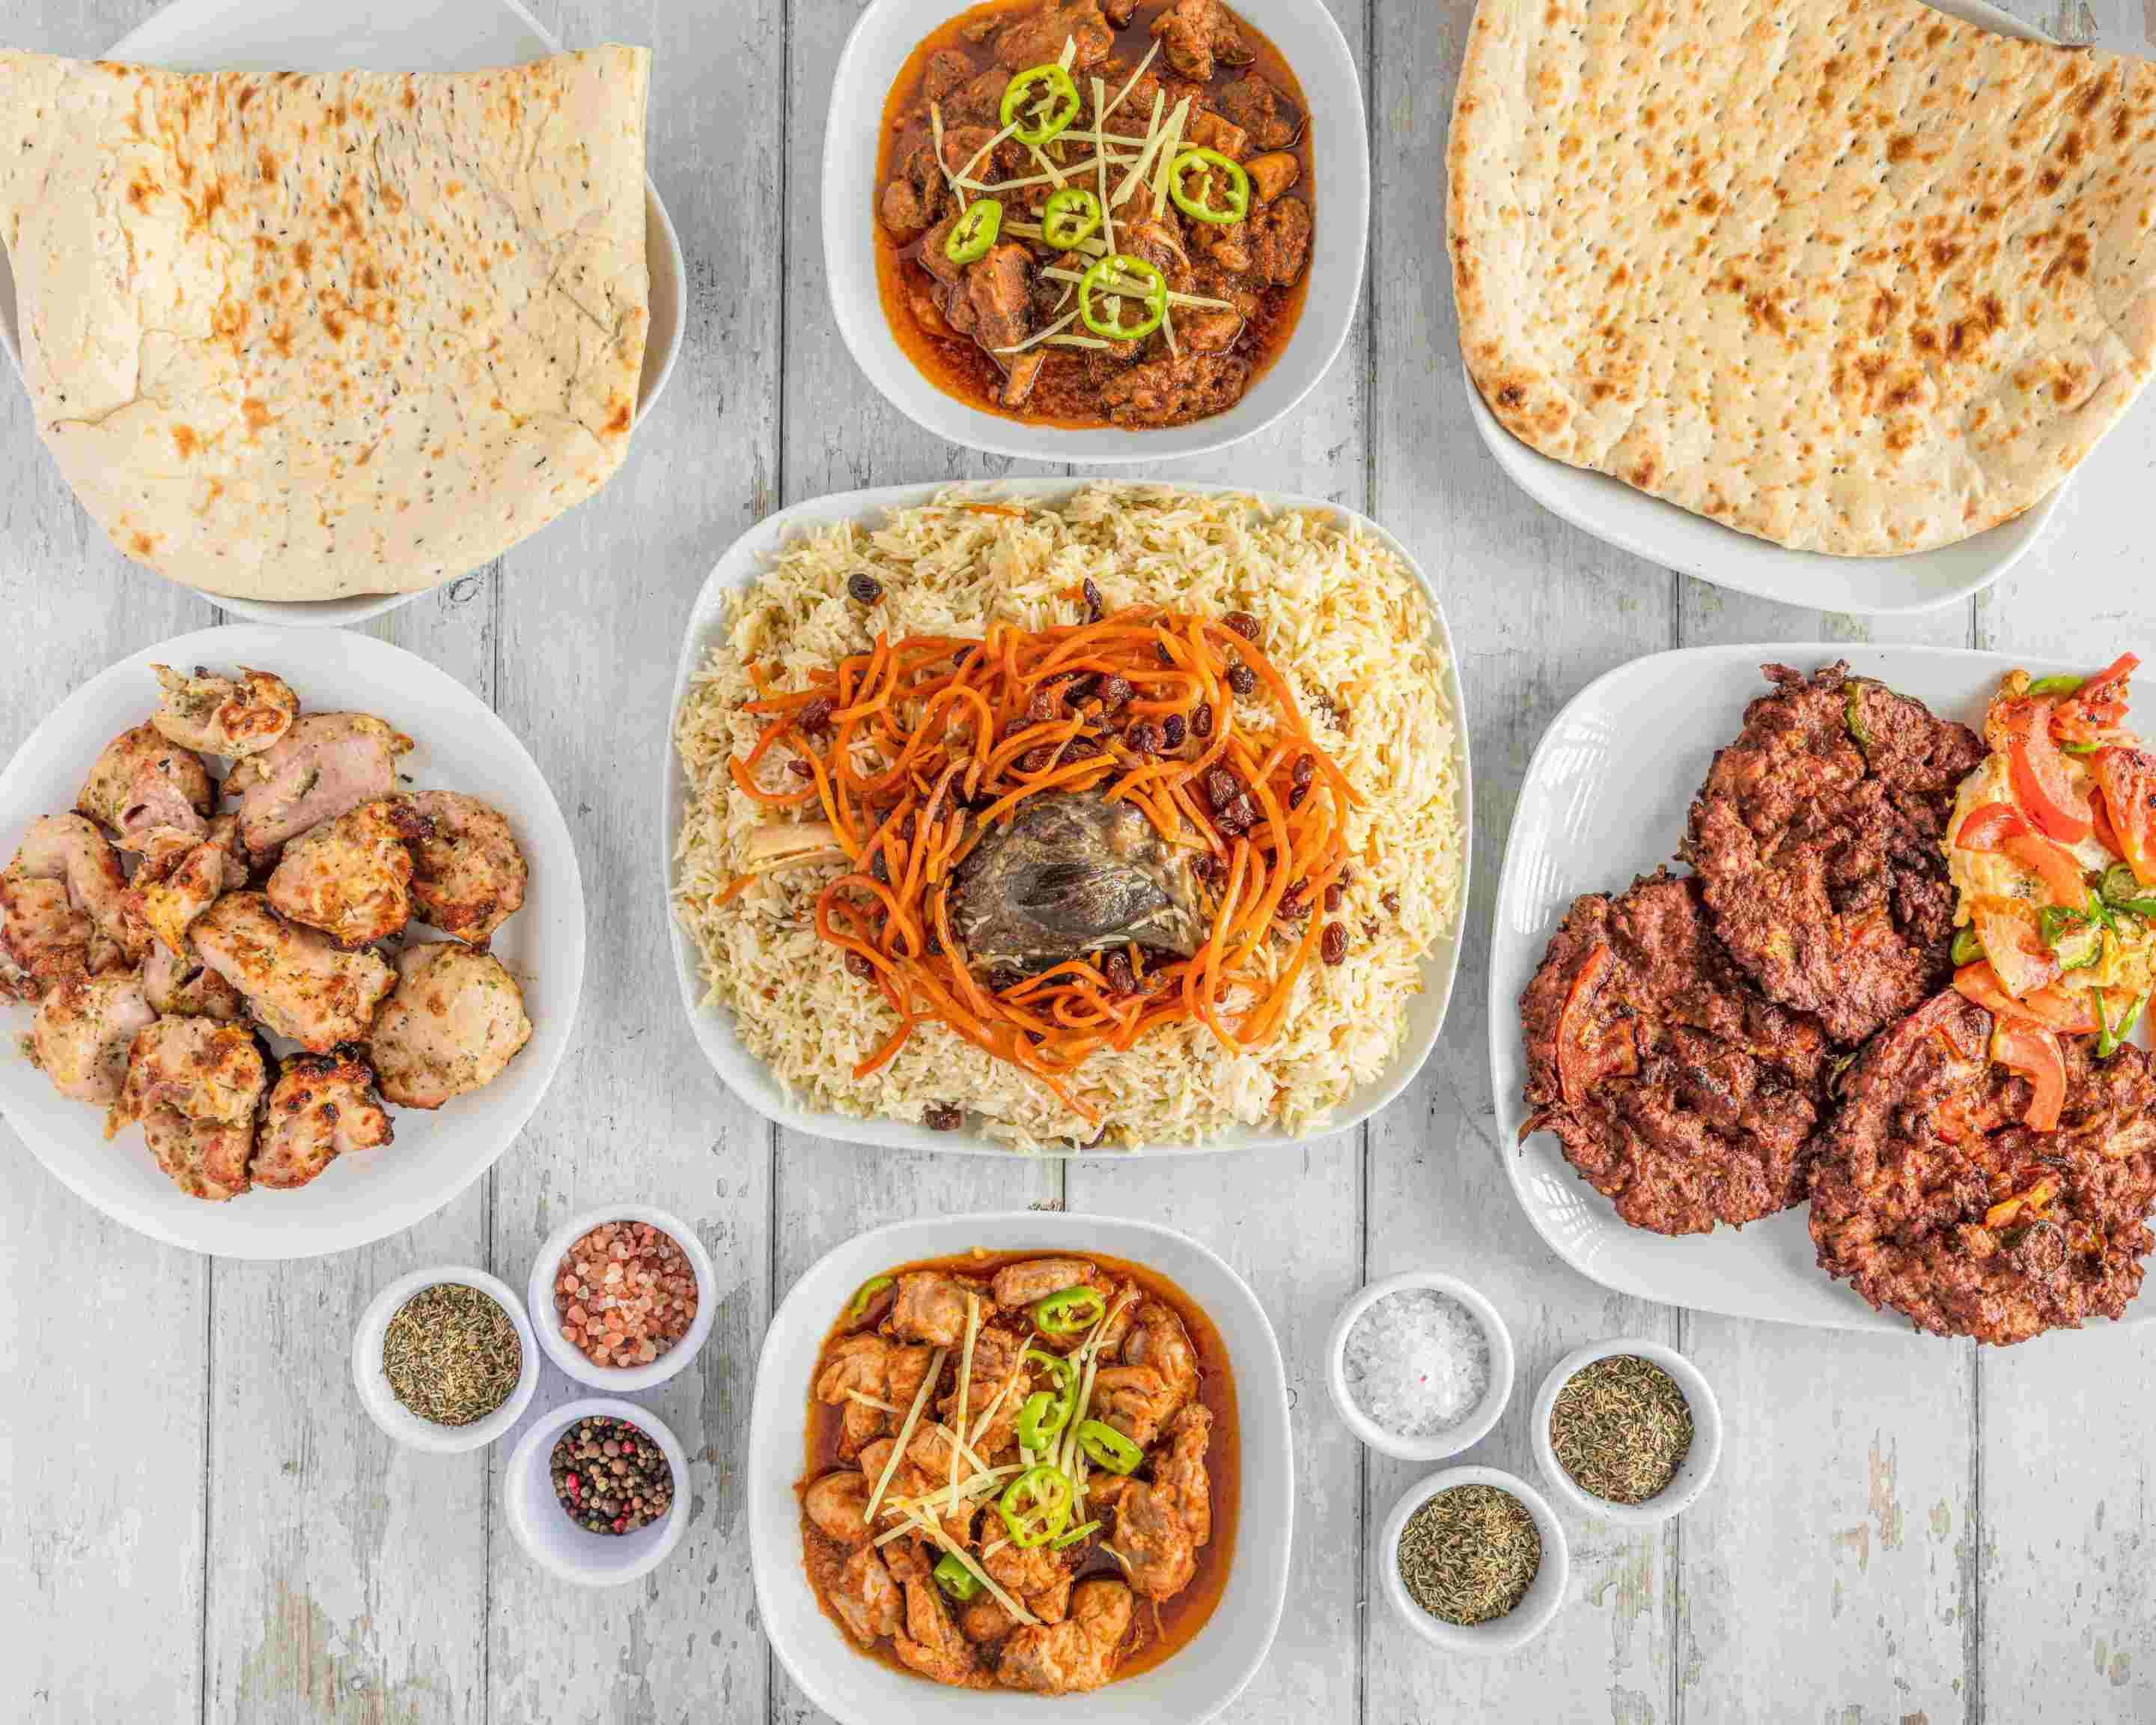 Indus Peshawari cuisine Menu - Takeaway in Bradford | Delivery menu ...